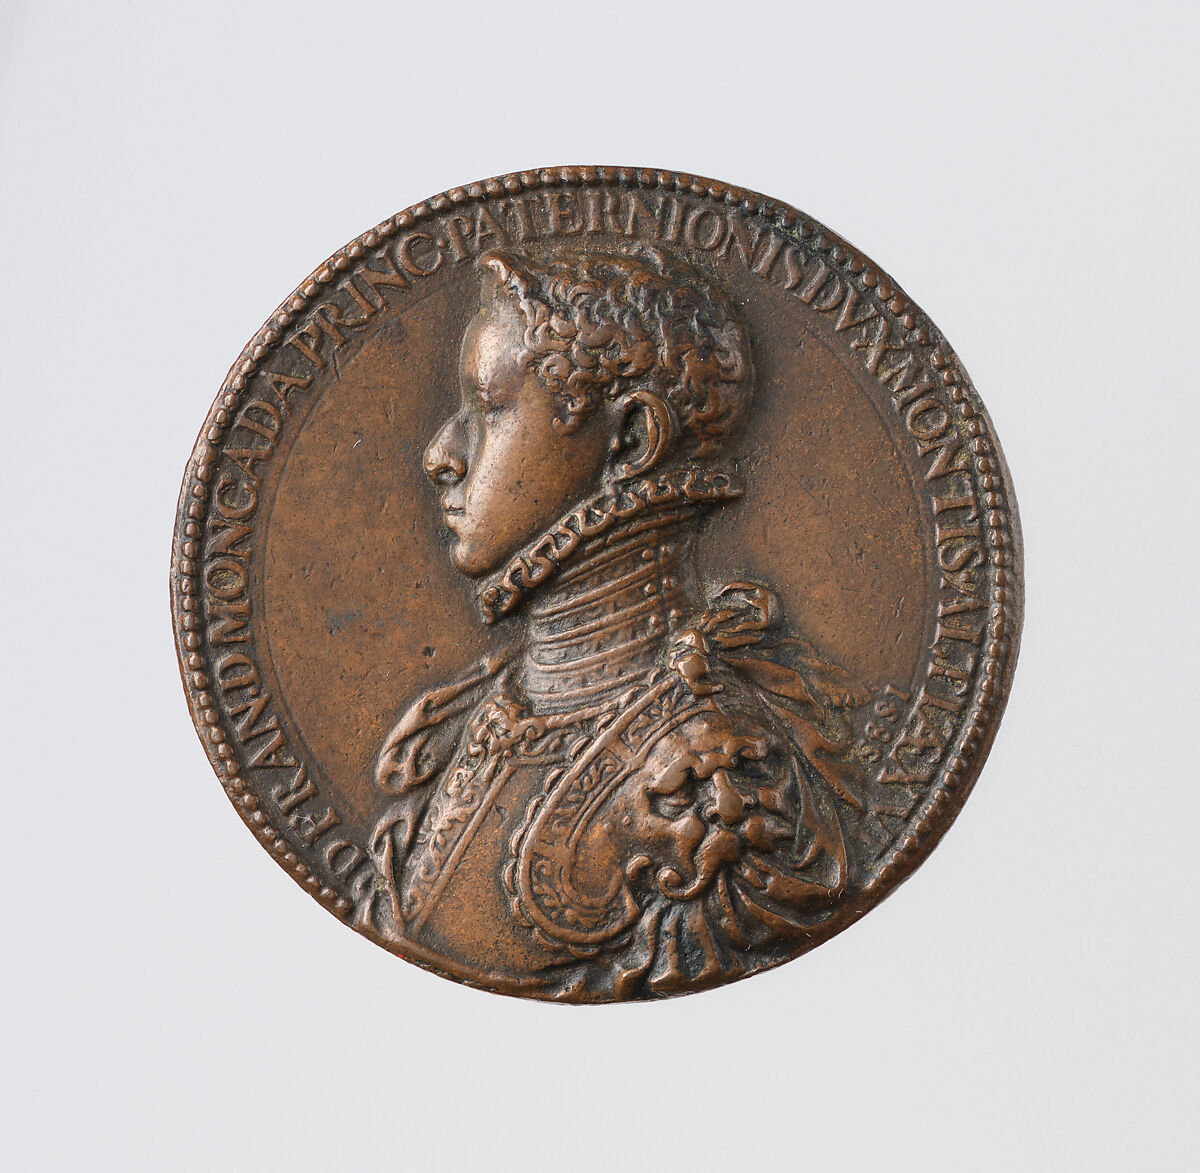 Francisco de Moncada, Duke of Montalto, Medalist: probably Pompeo Leoni (Italian, active Spain, ca. 1533–1608), Bronze, brown patina, cast, Italian 